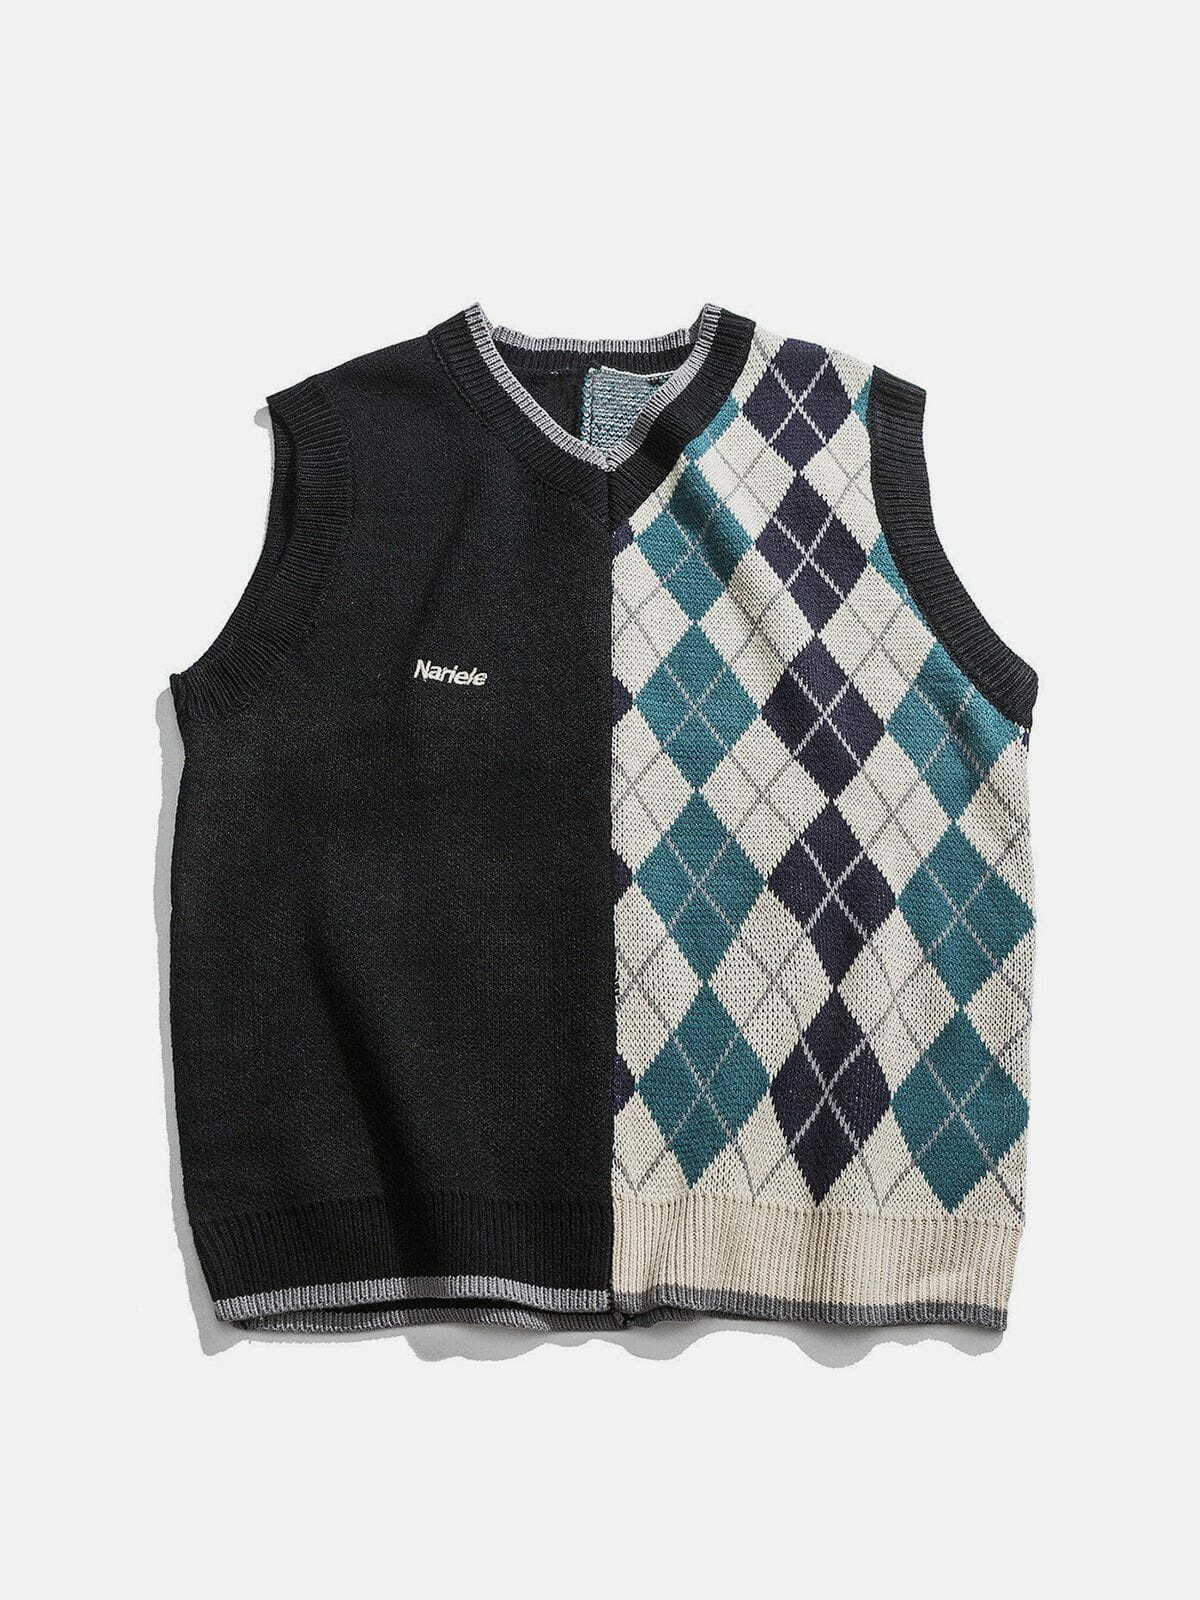 diamond stitch sweater vest edgy streetwear essential 6817